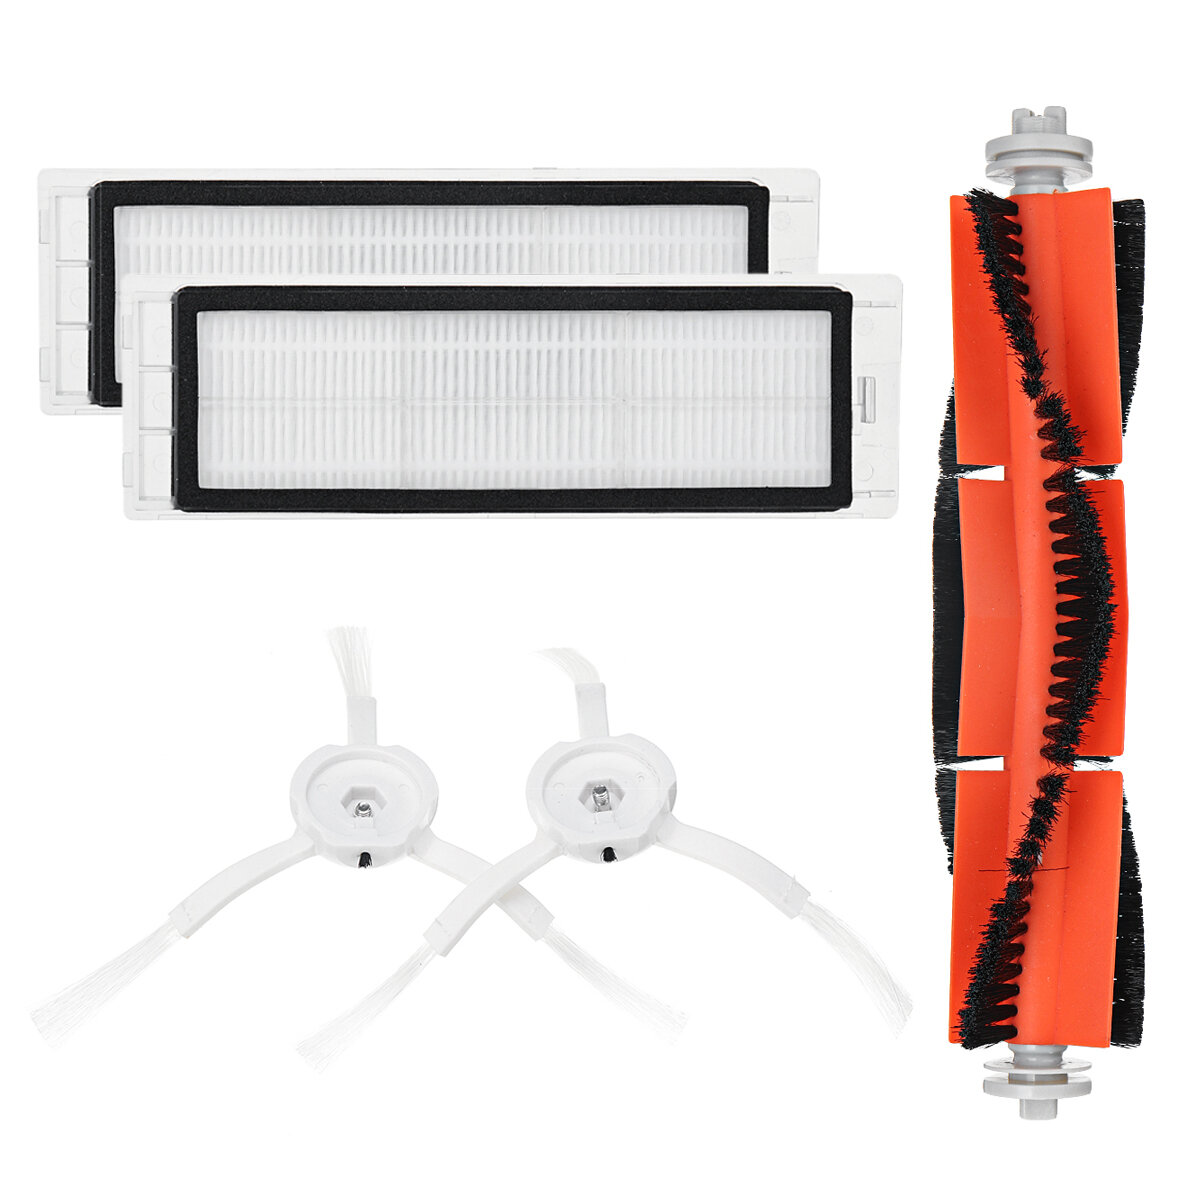 32x Main Brush HEPA Filter Accessories For Xiaomi Roborock S6 S5 Vacuum Cleaner 